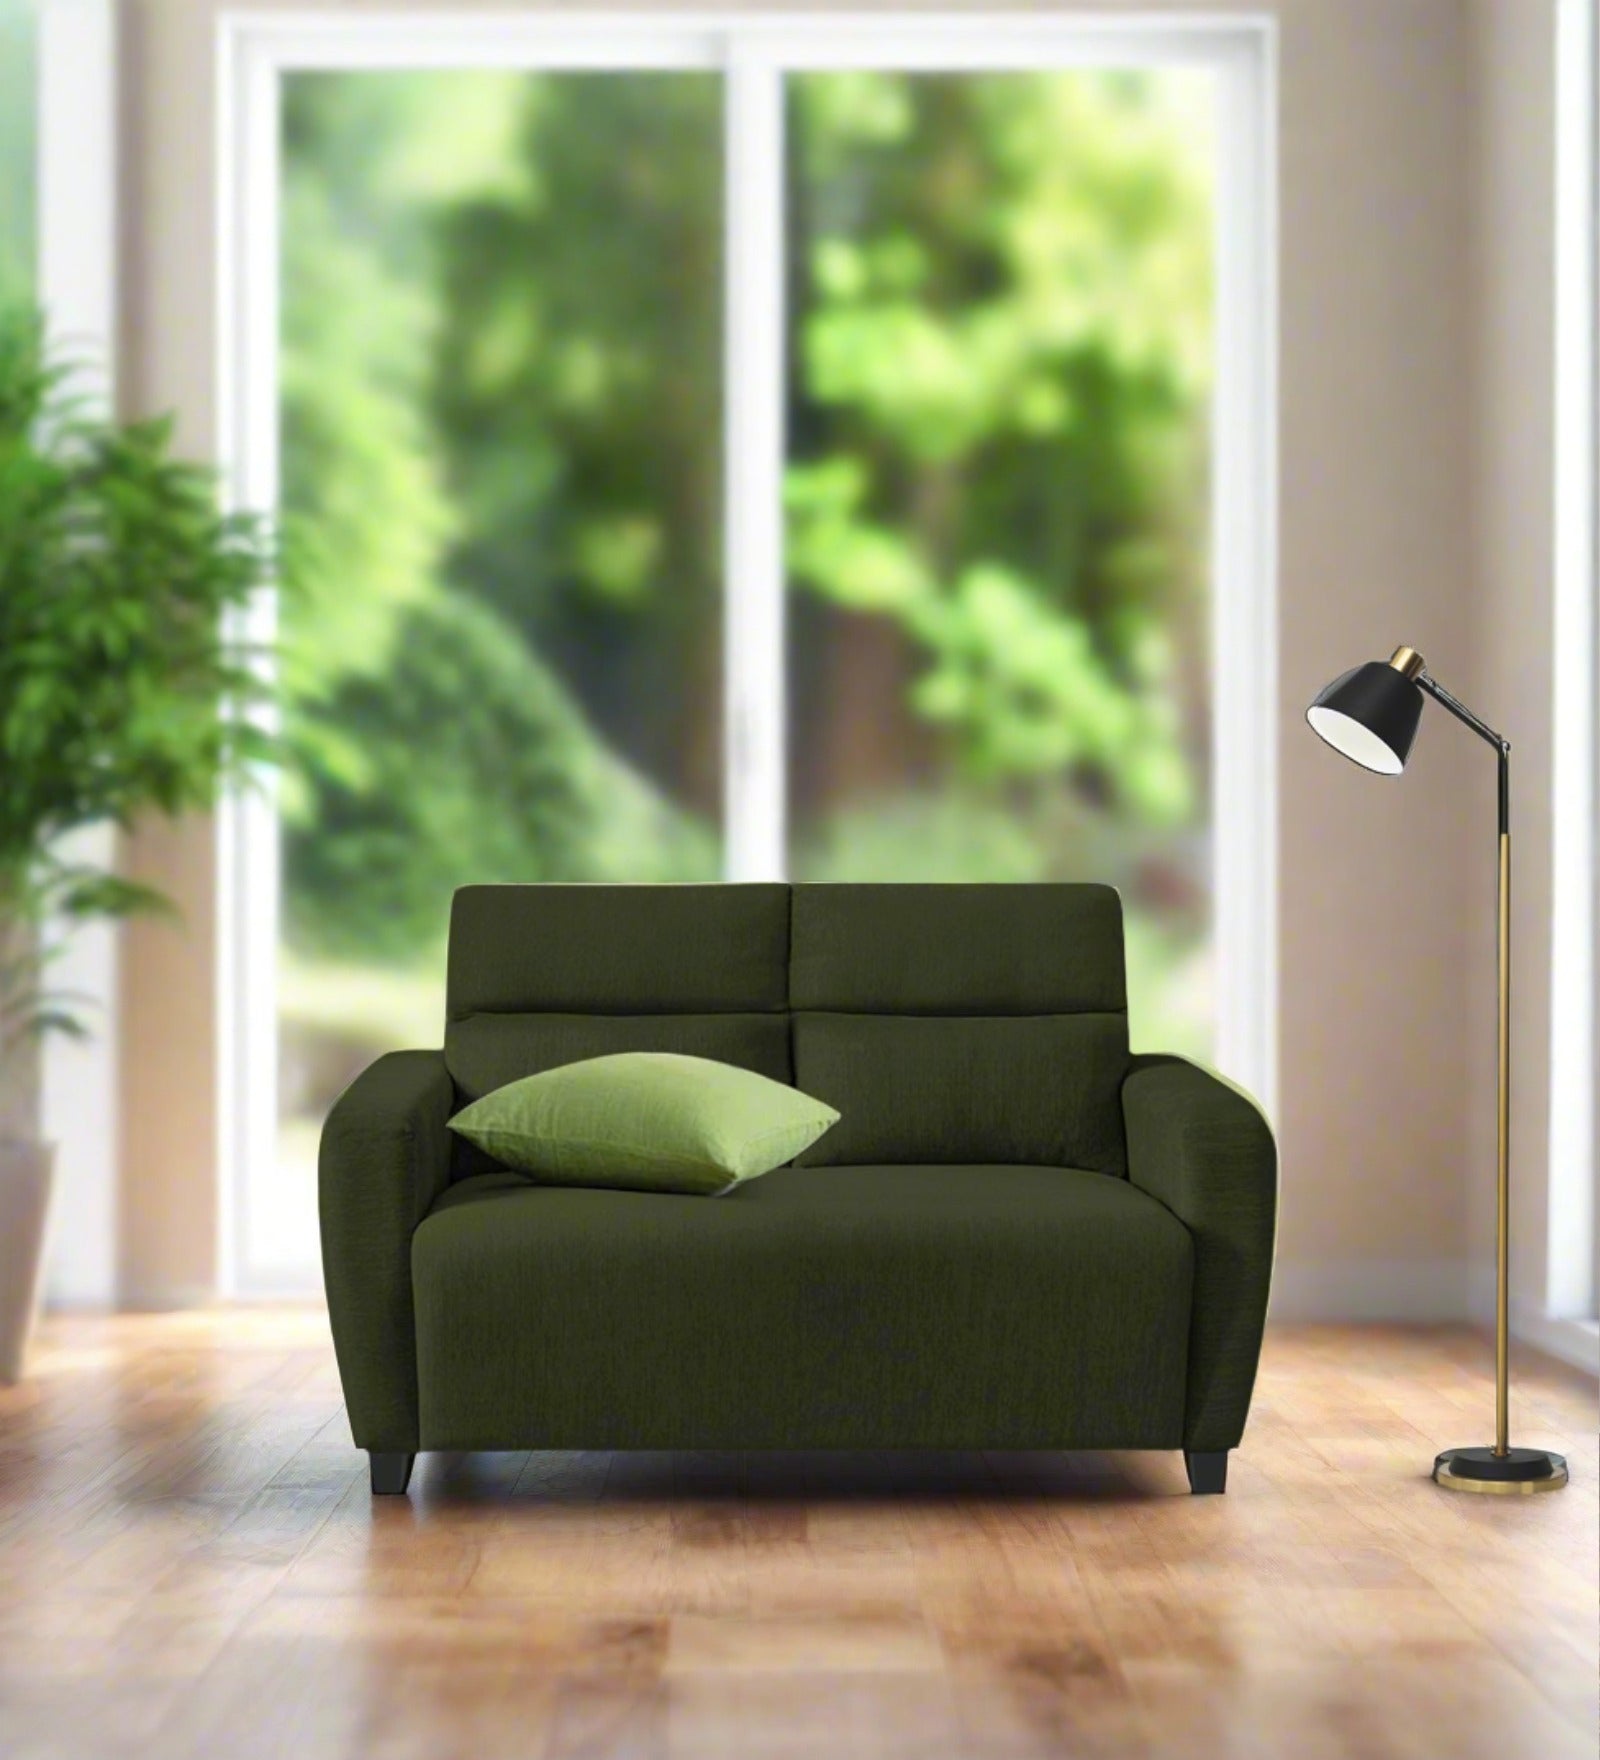 Bakadi Fabric 2 Seater Sofa in Olive Green Colour